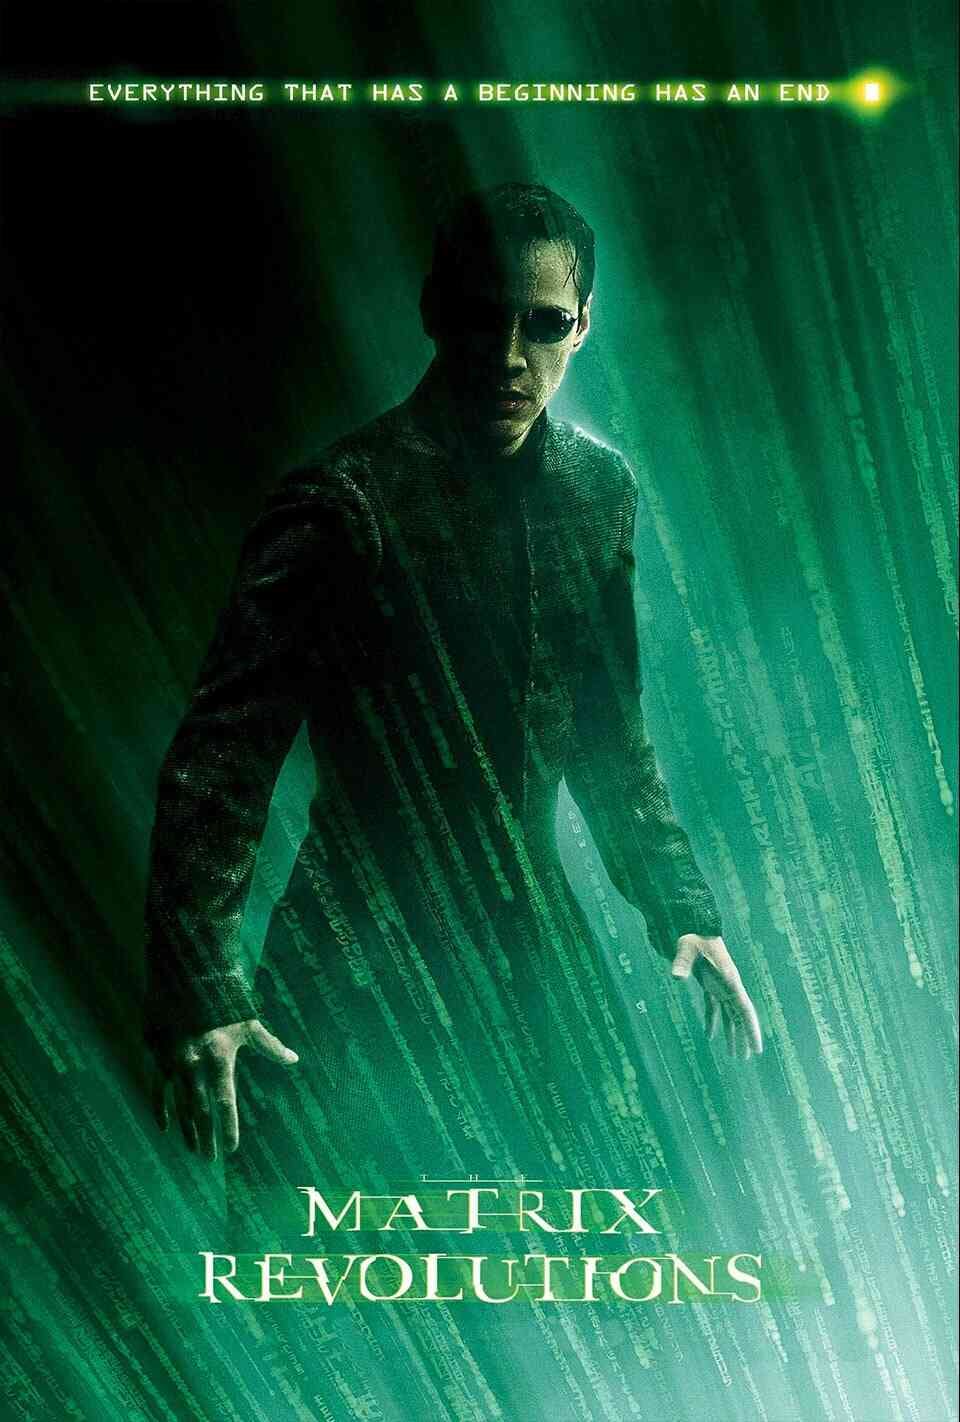 Read The Matrix Revolutions screenplay.